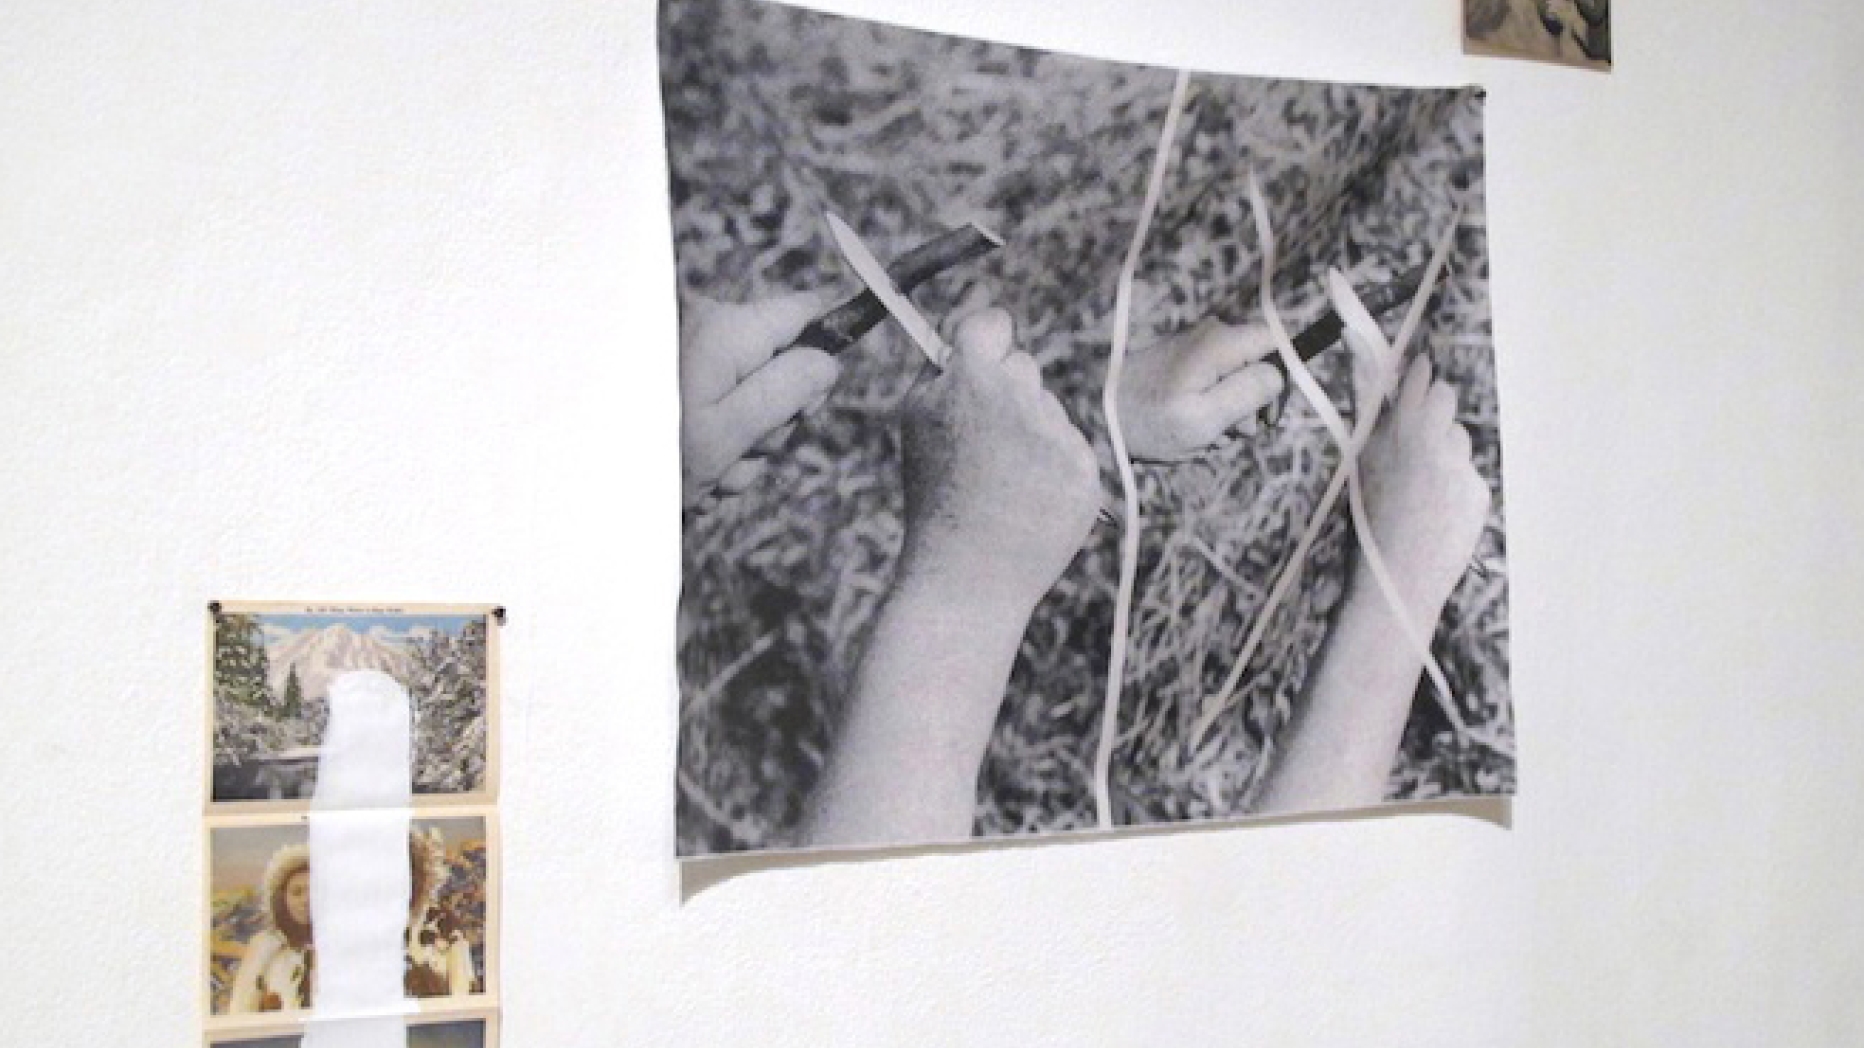 Three photographs on display